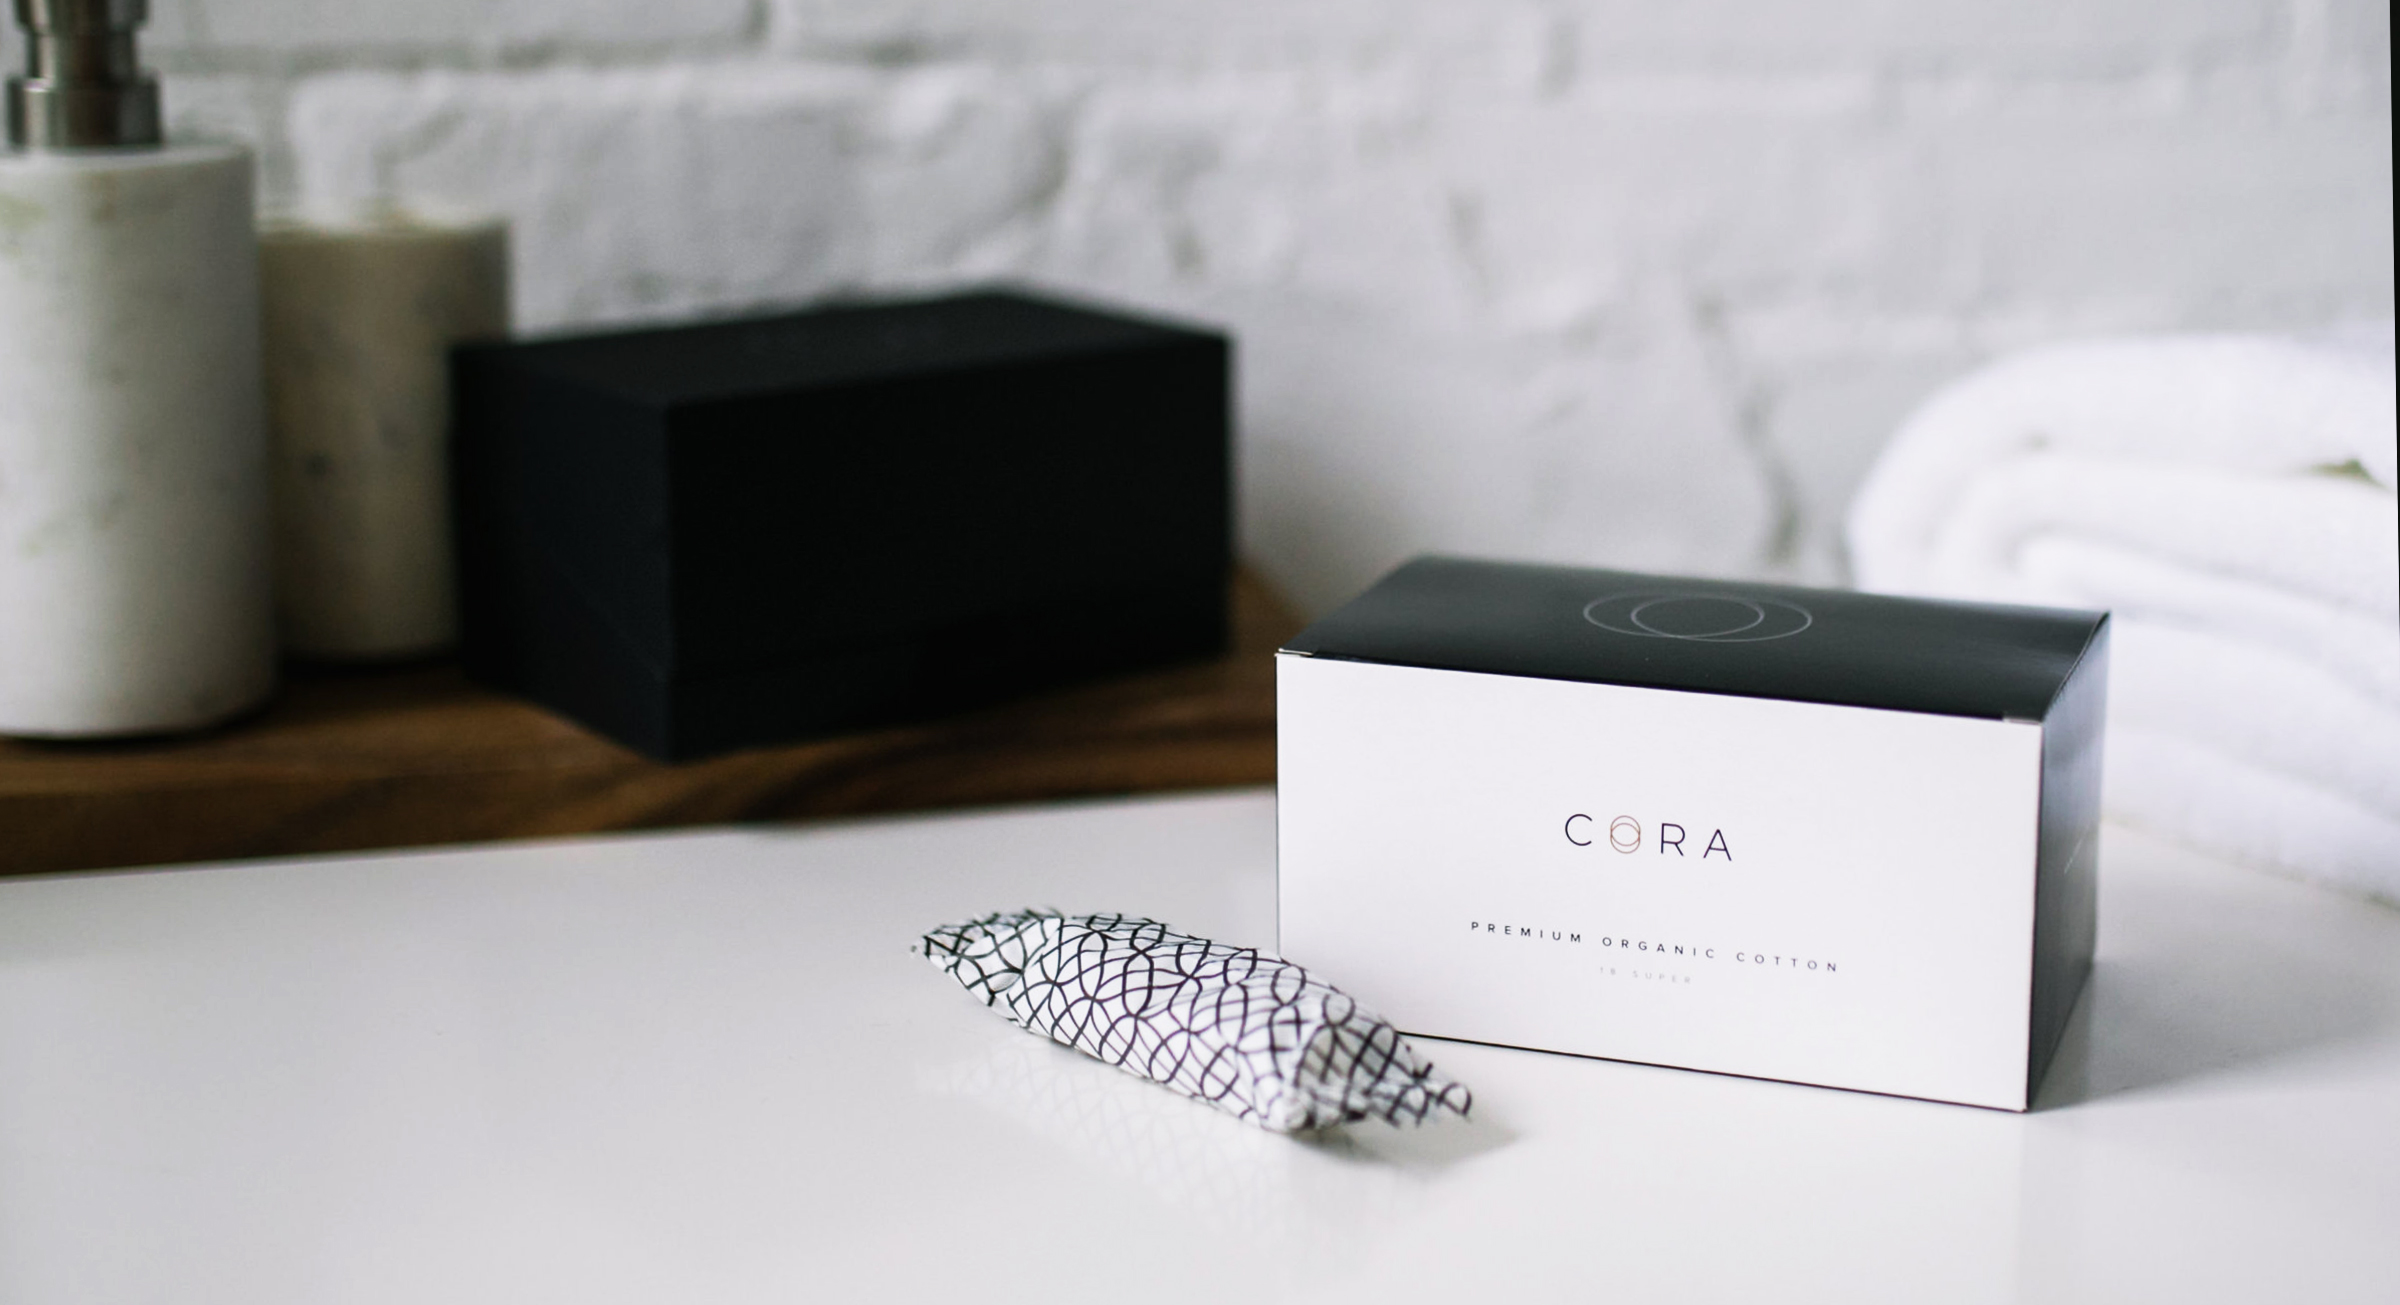 Cora Organic Tampon and Box - Lifestyle